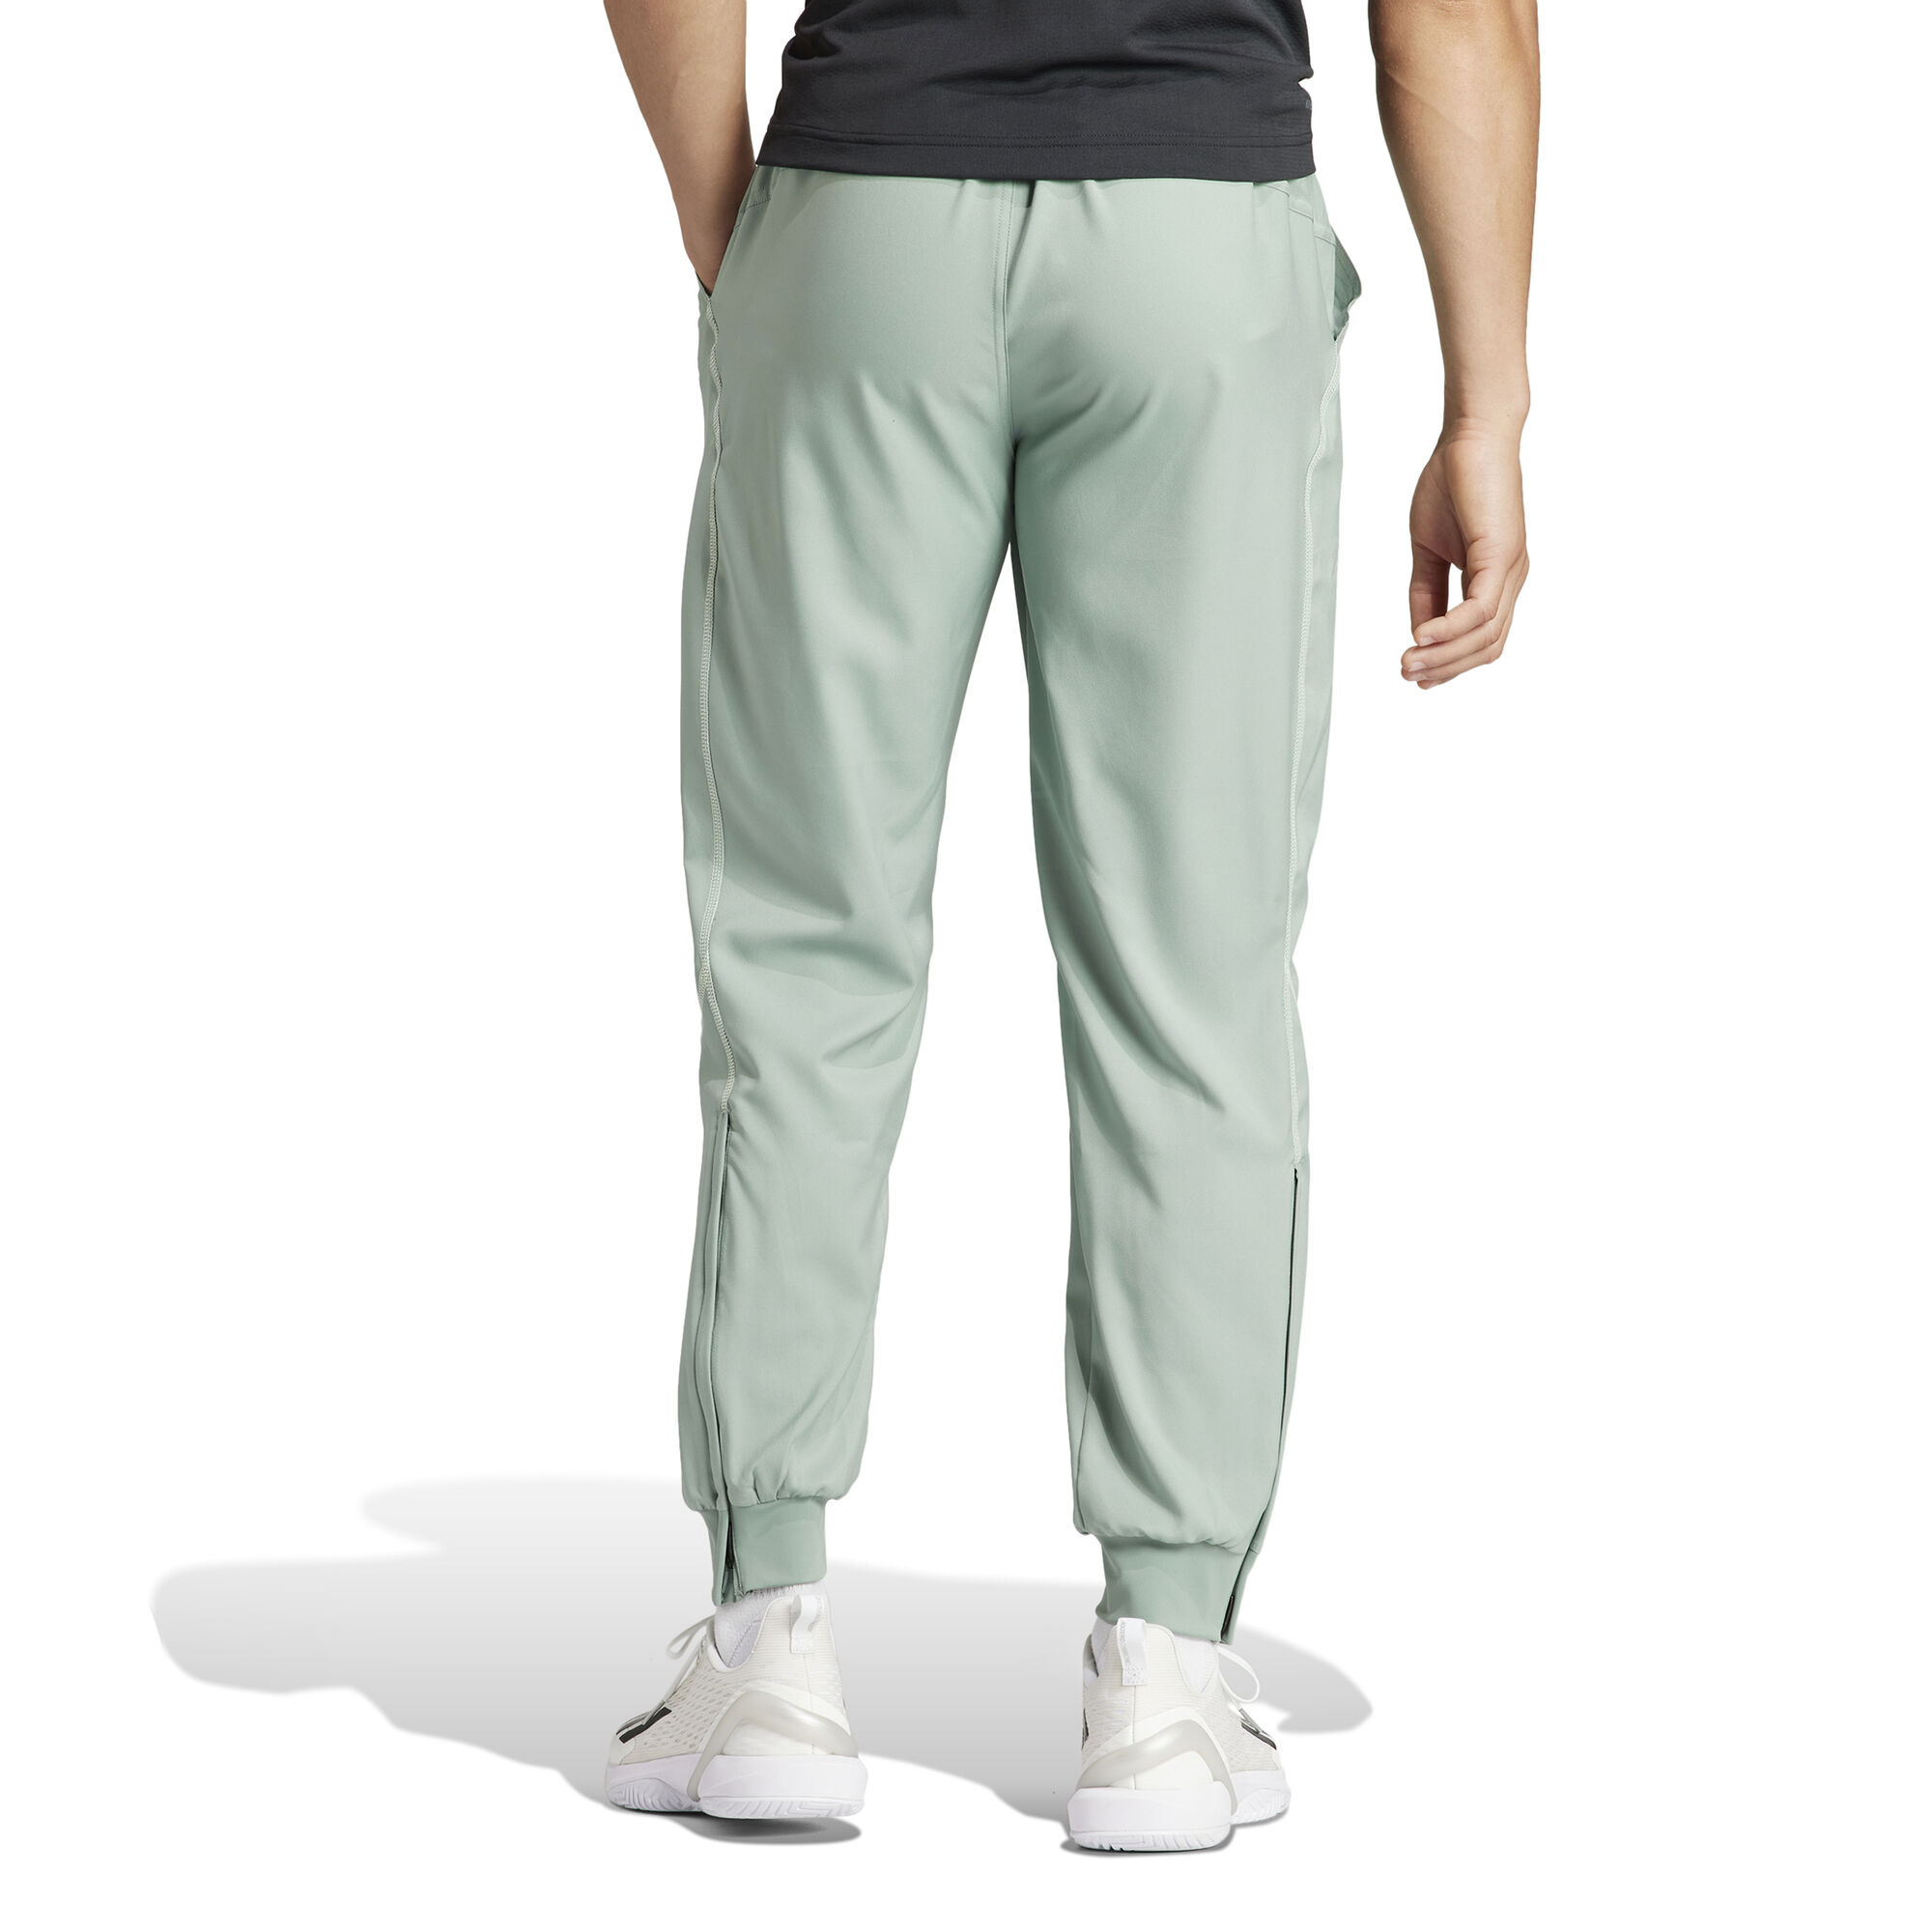 Buy adidas Pro Training Pants Men Light Green online